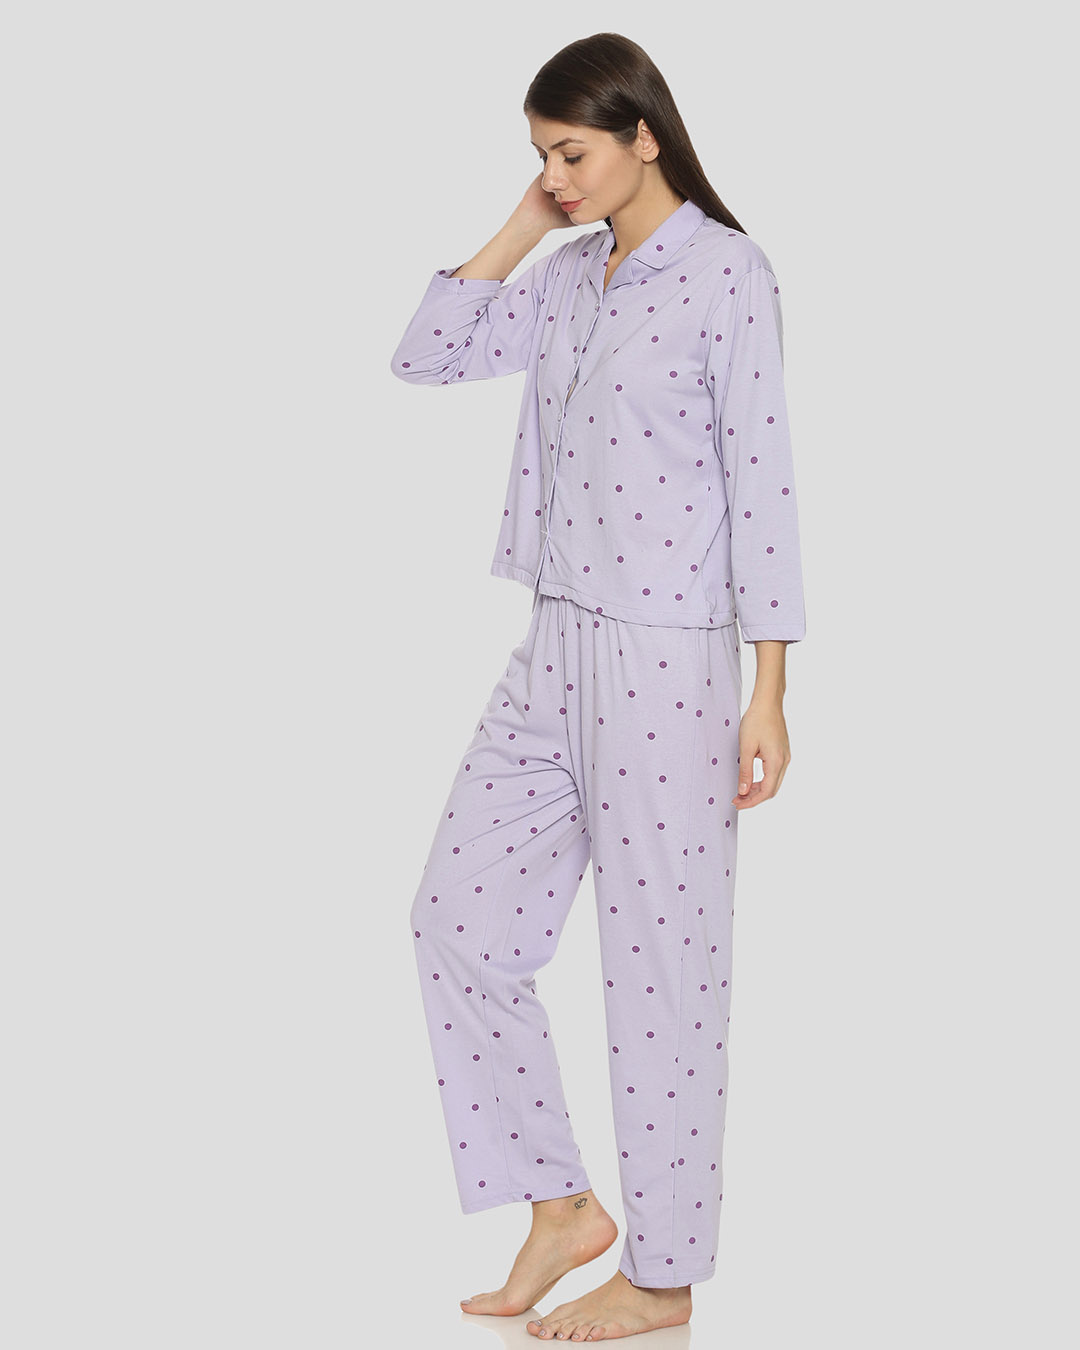 Shop Women's Lavender Printed Stylish Night Suit-Back